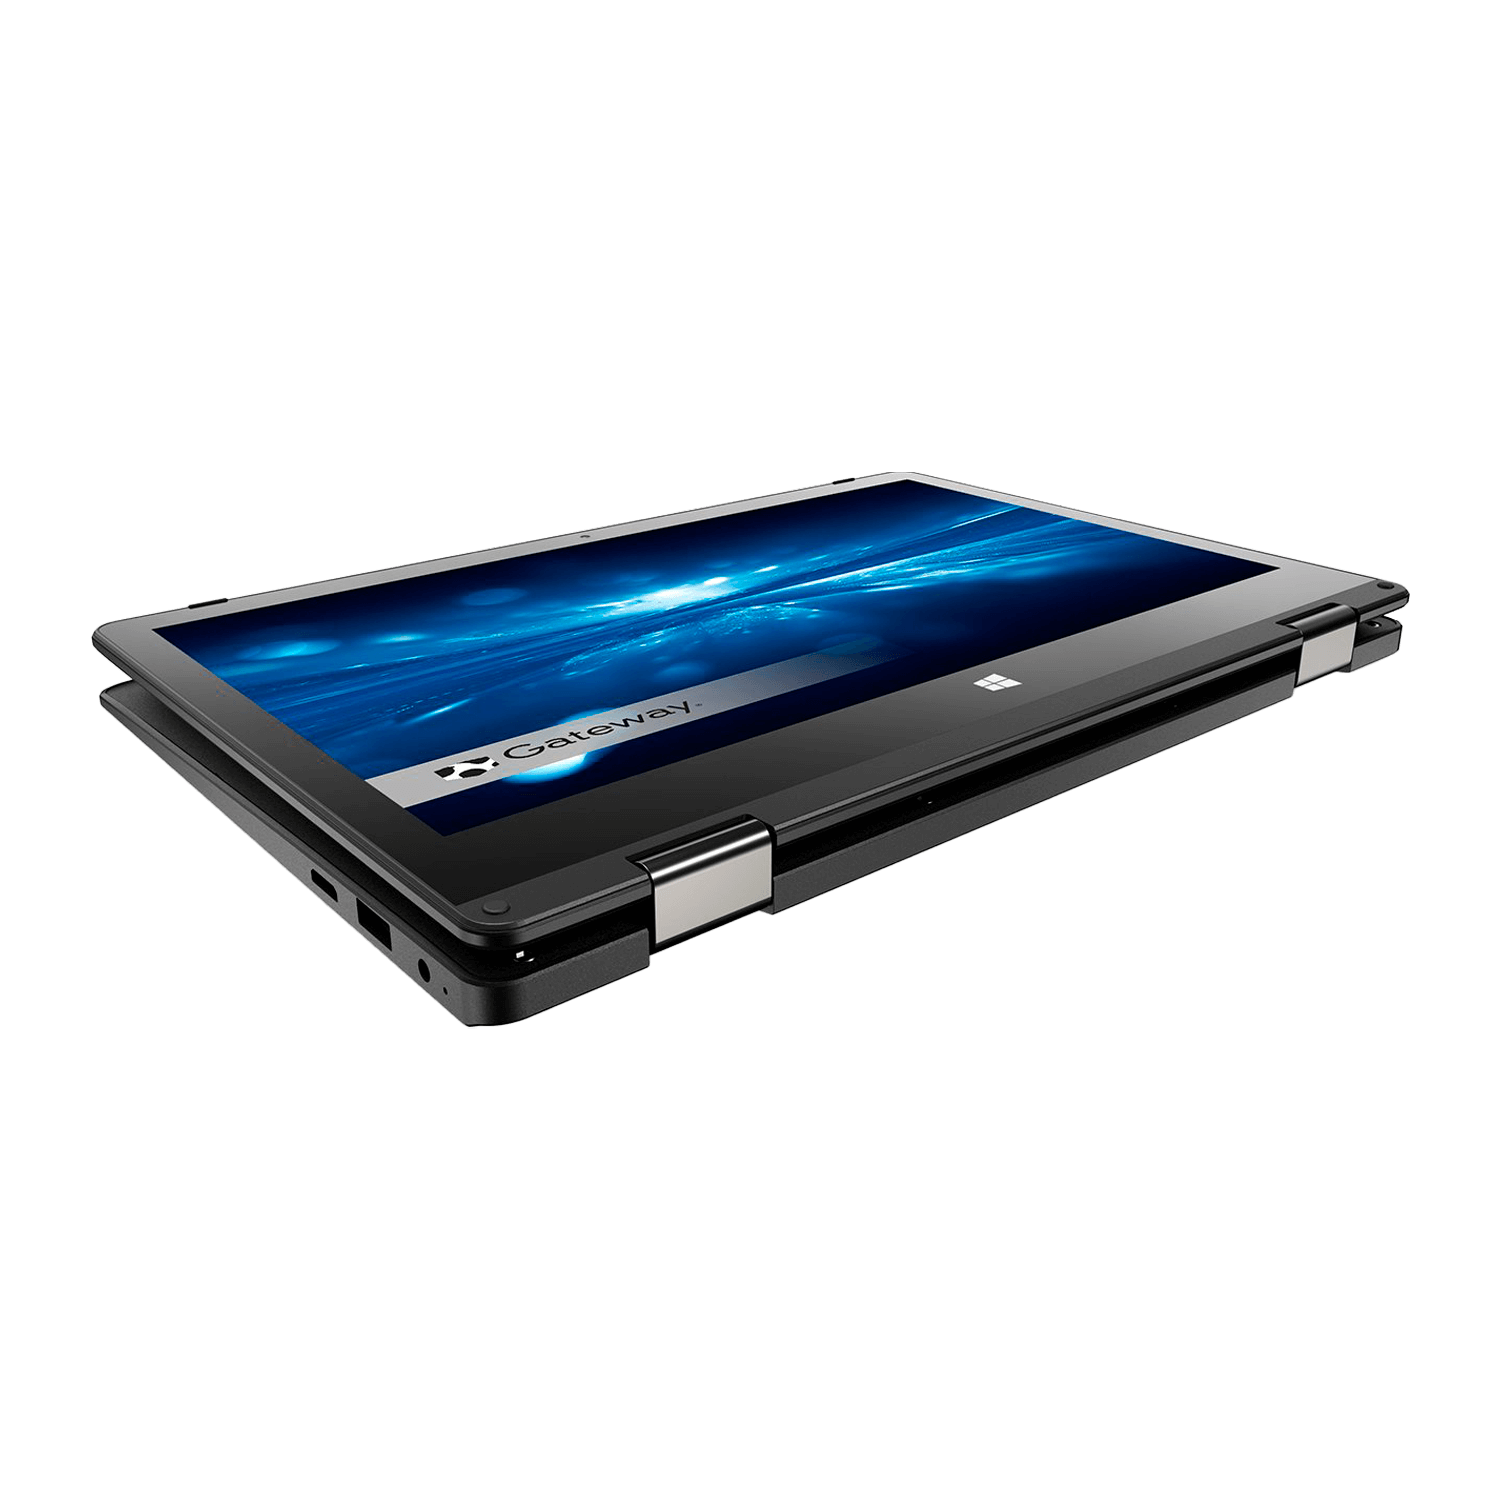 Notebook Gateway GWTC116-2BK Intel Celeron-N4020 4GB RAM / 64GB / Tela 11.6" Touchscreen / Windows 10 - Preto